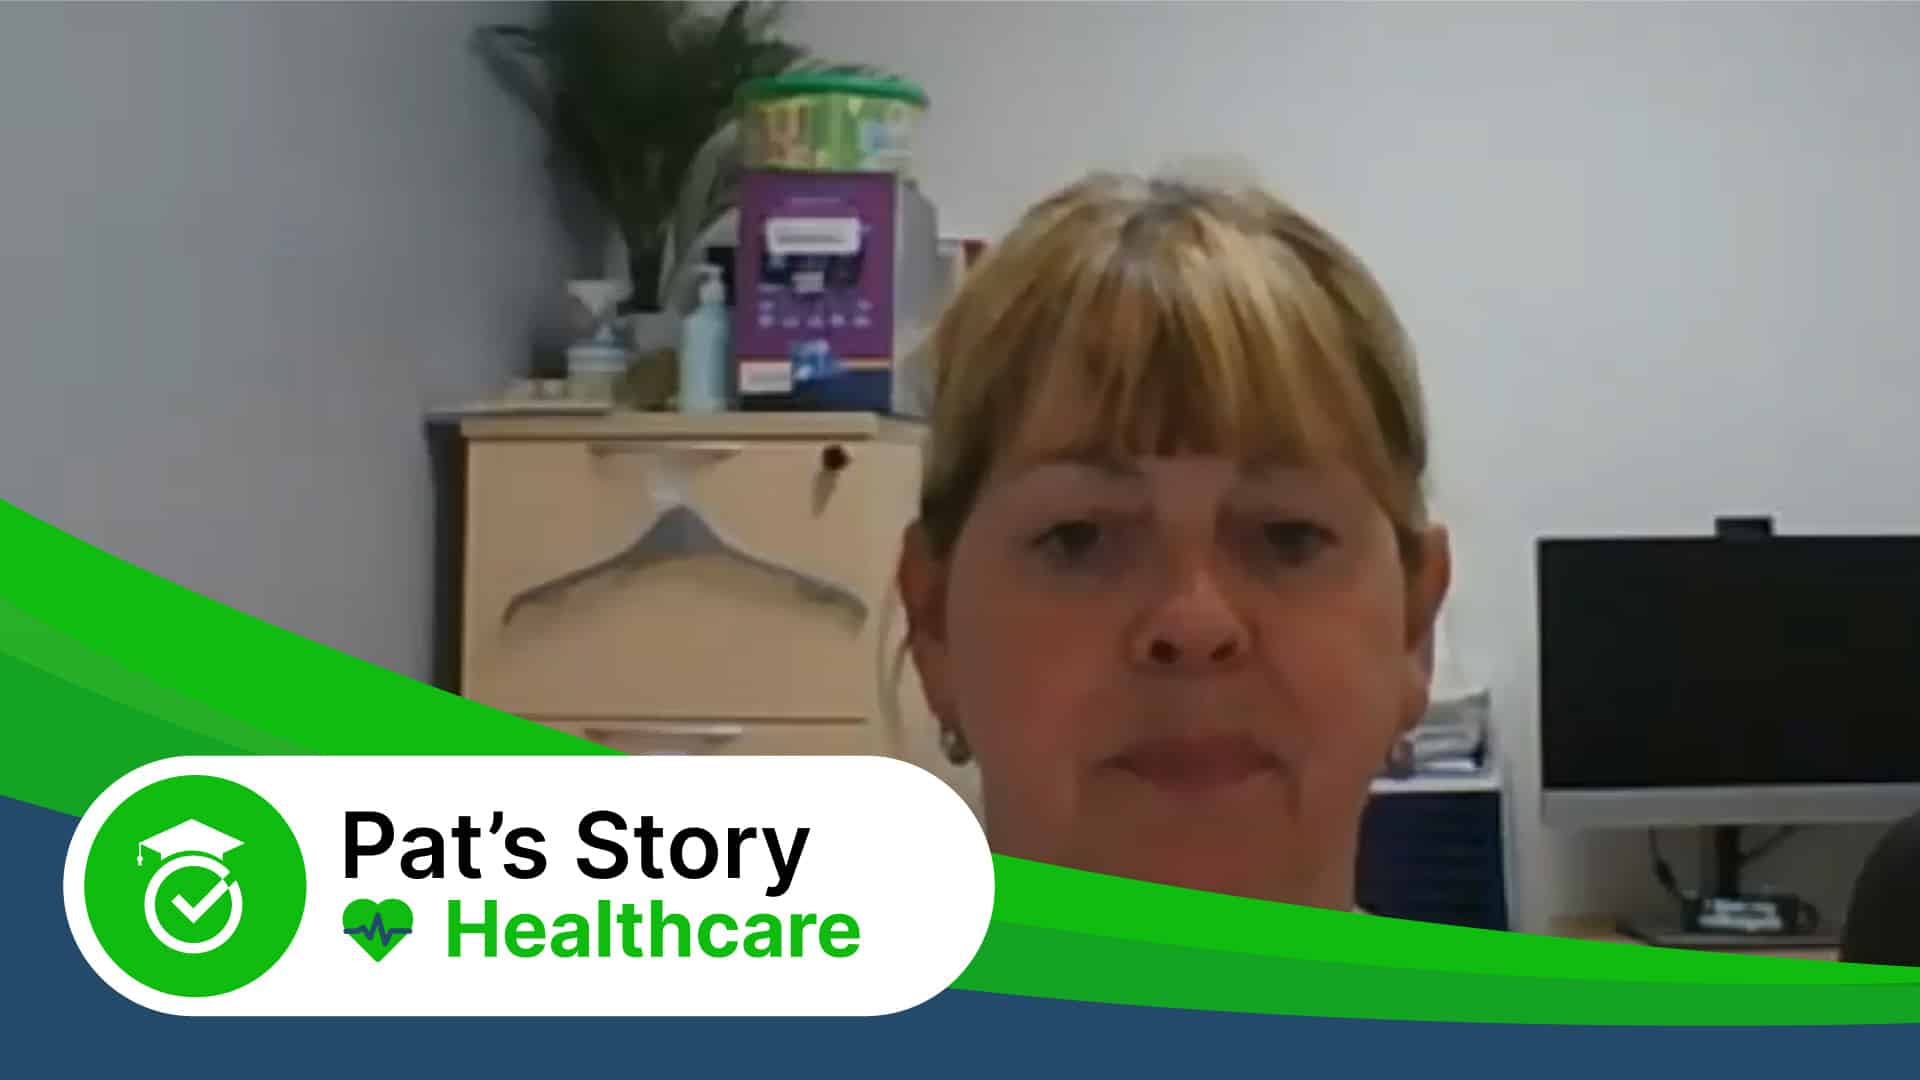 Pat's Story: A Healthcare Degree testimonial